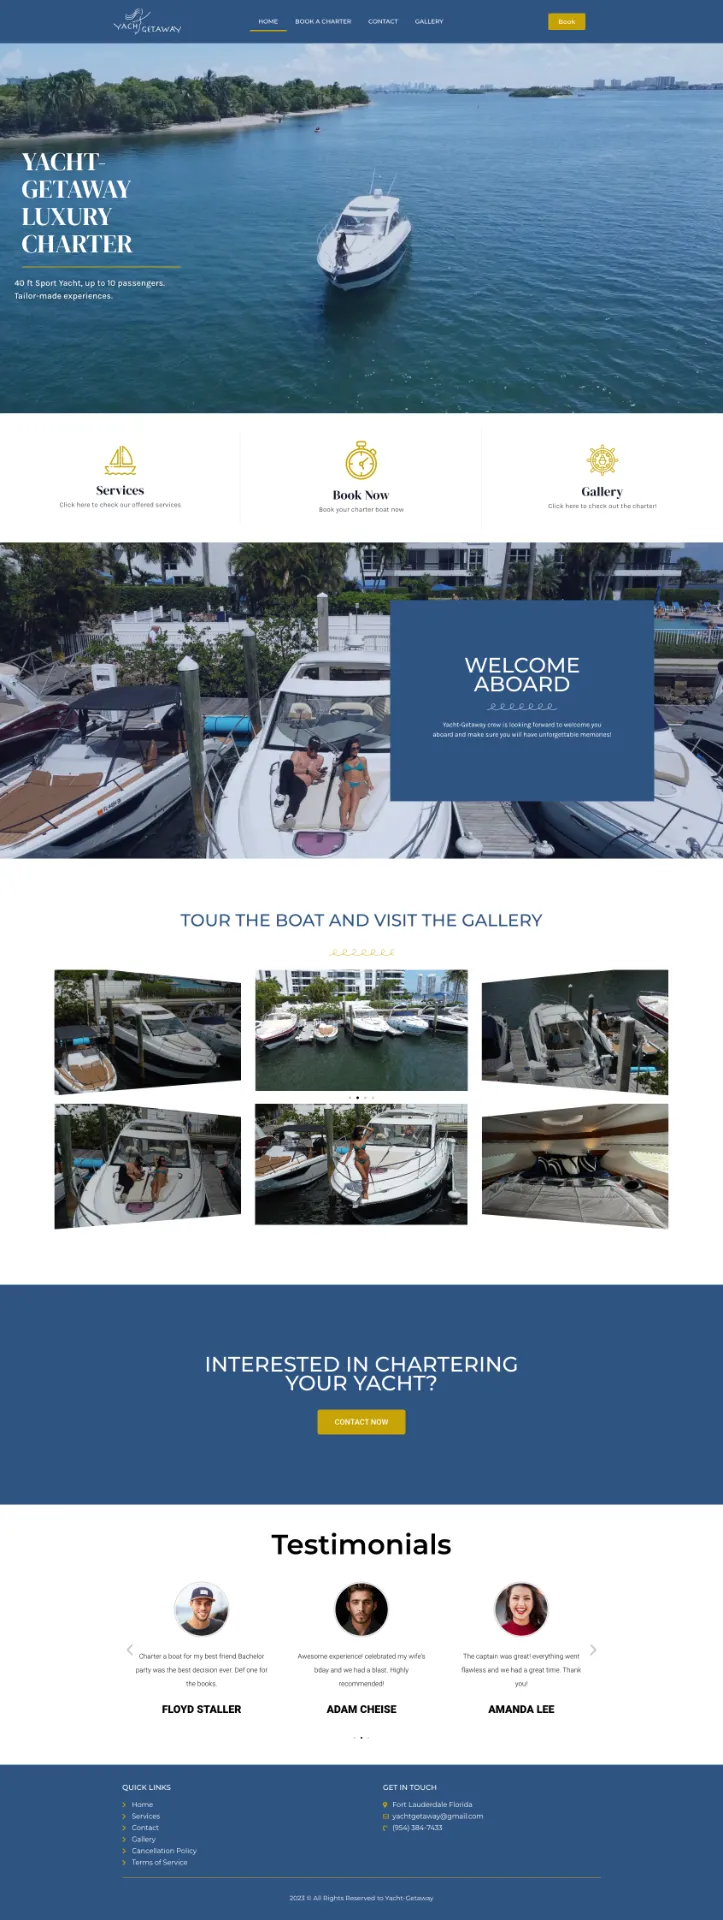 Charter-Yacht-website-design-Miami-Florida